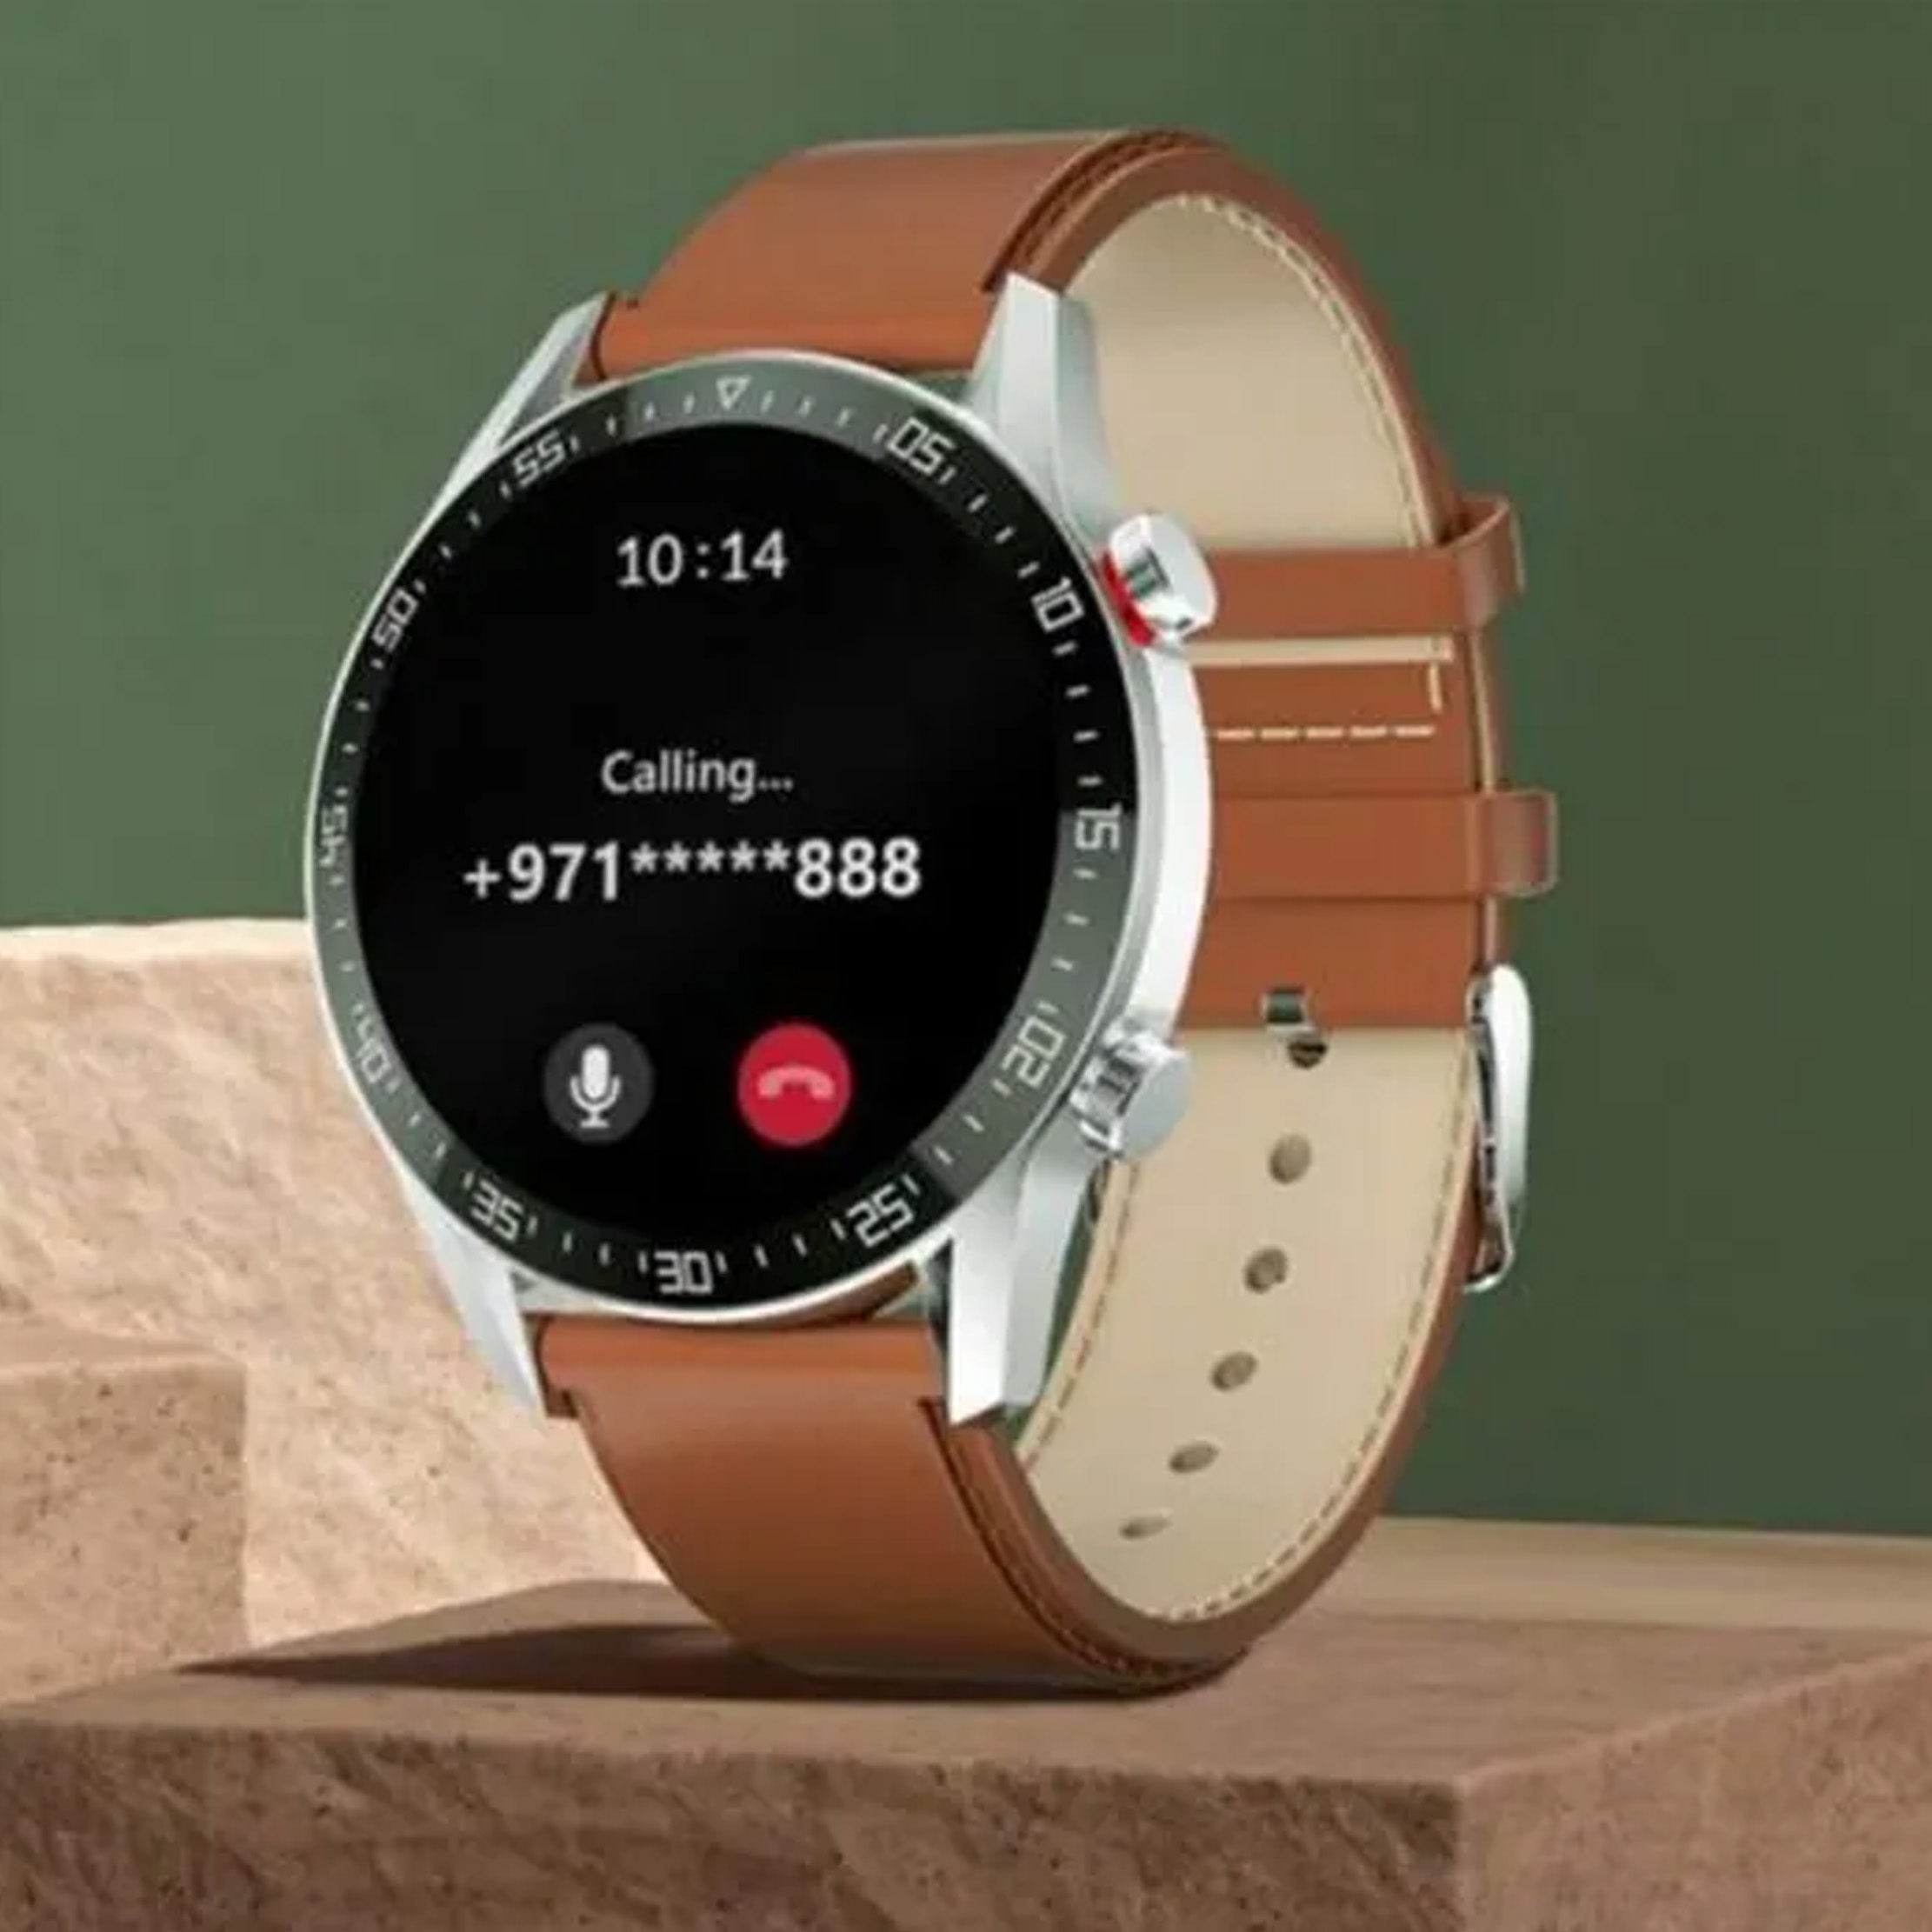 Trending Haino Teko RW11 Germany High Quality Smart Watch